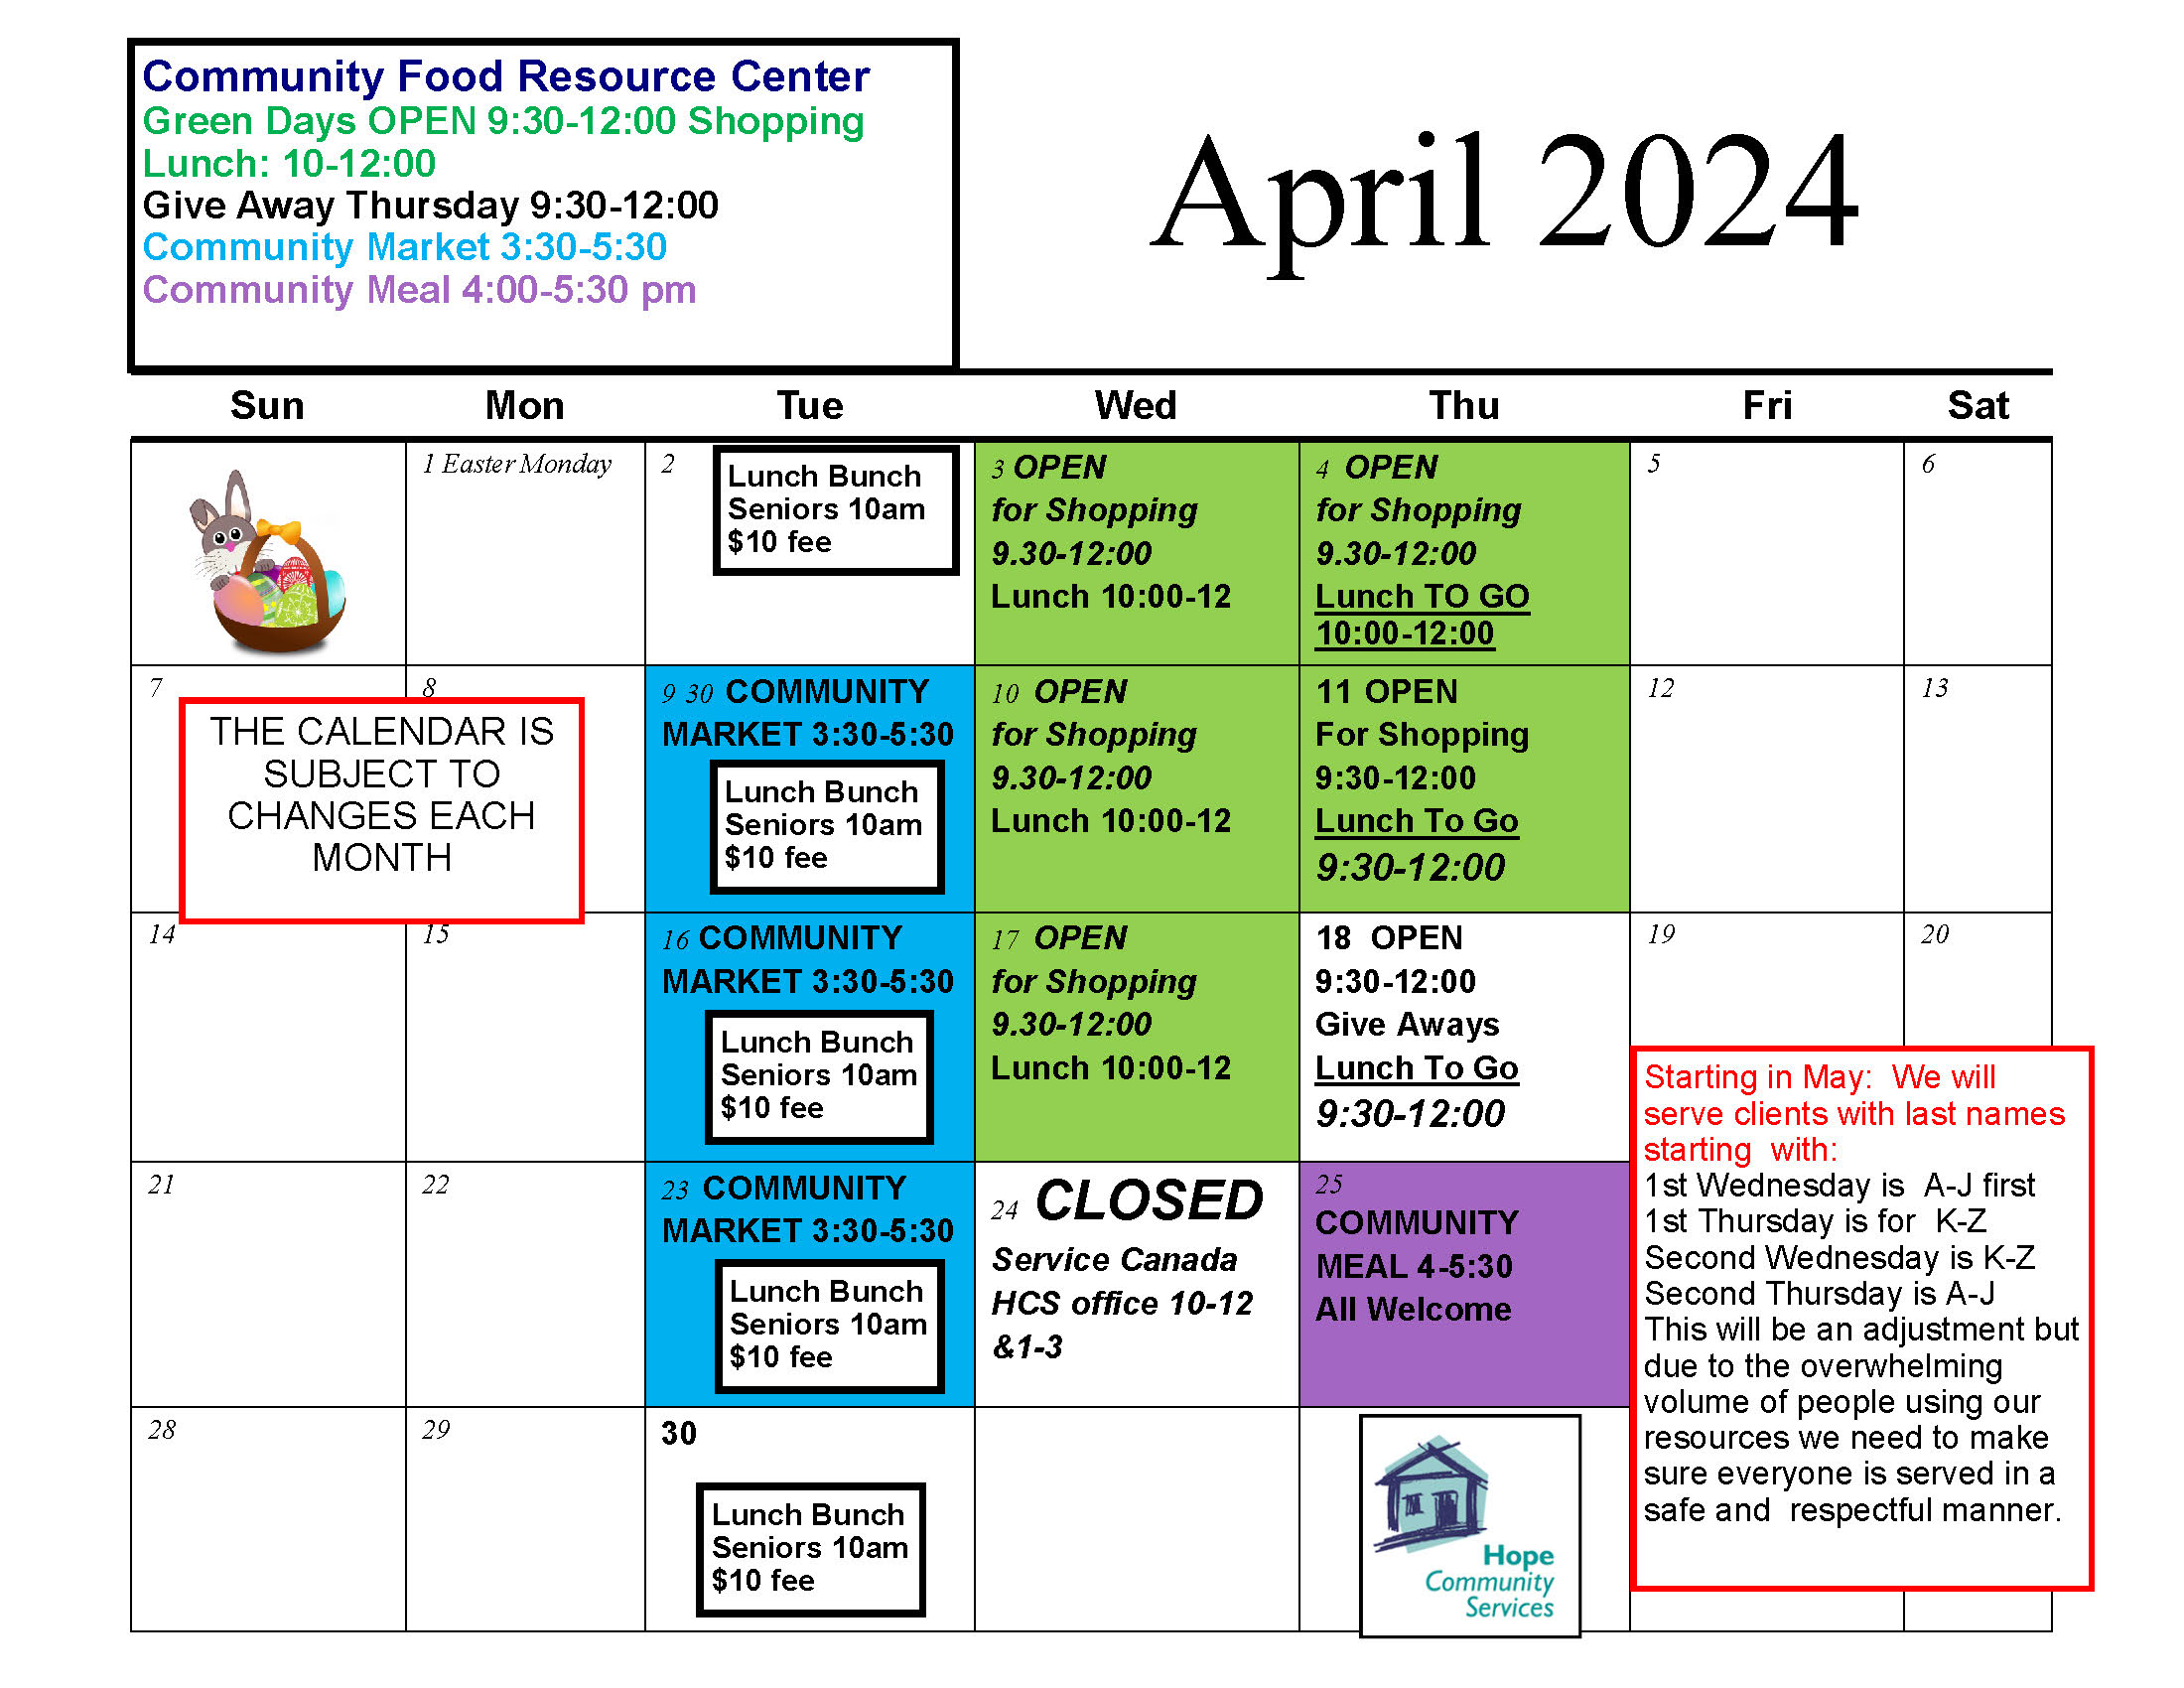 HCS Food Resource Centre calendar for April 2024